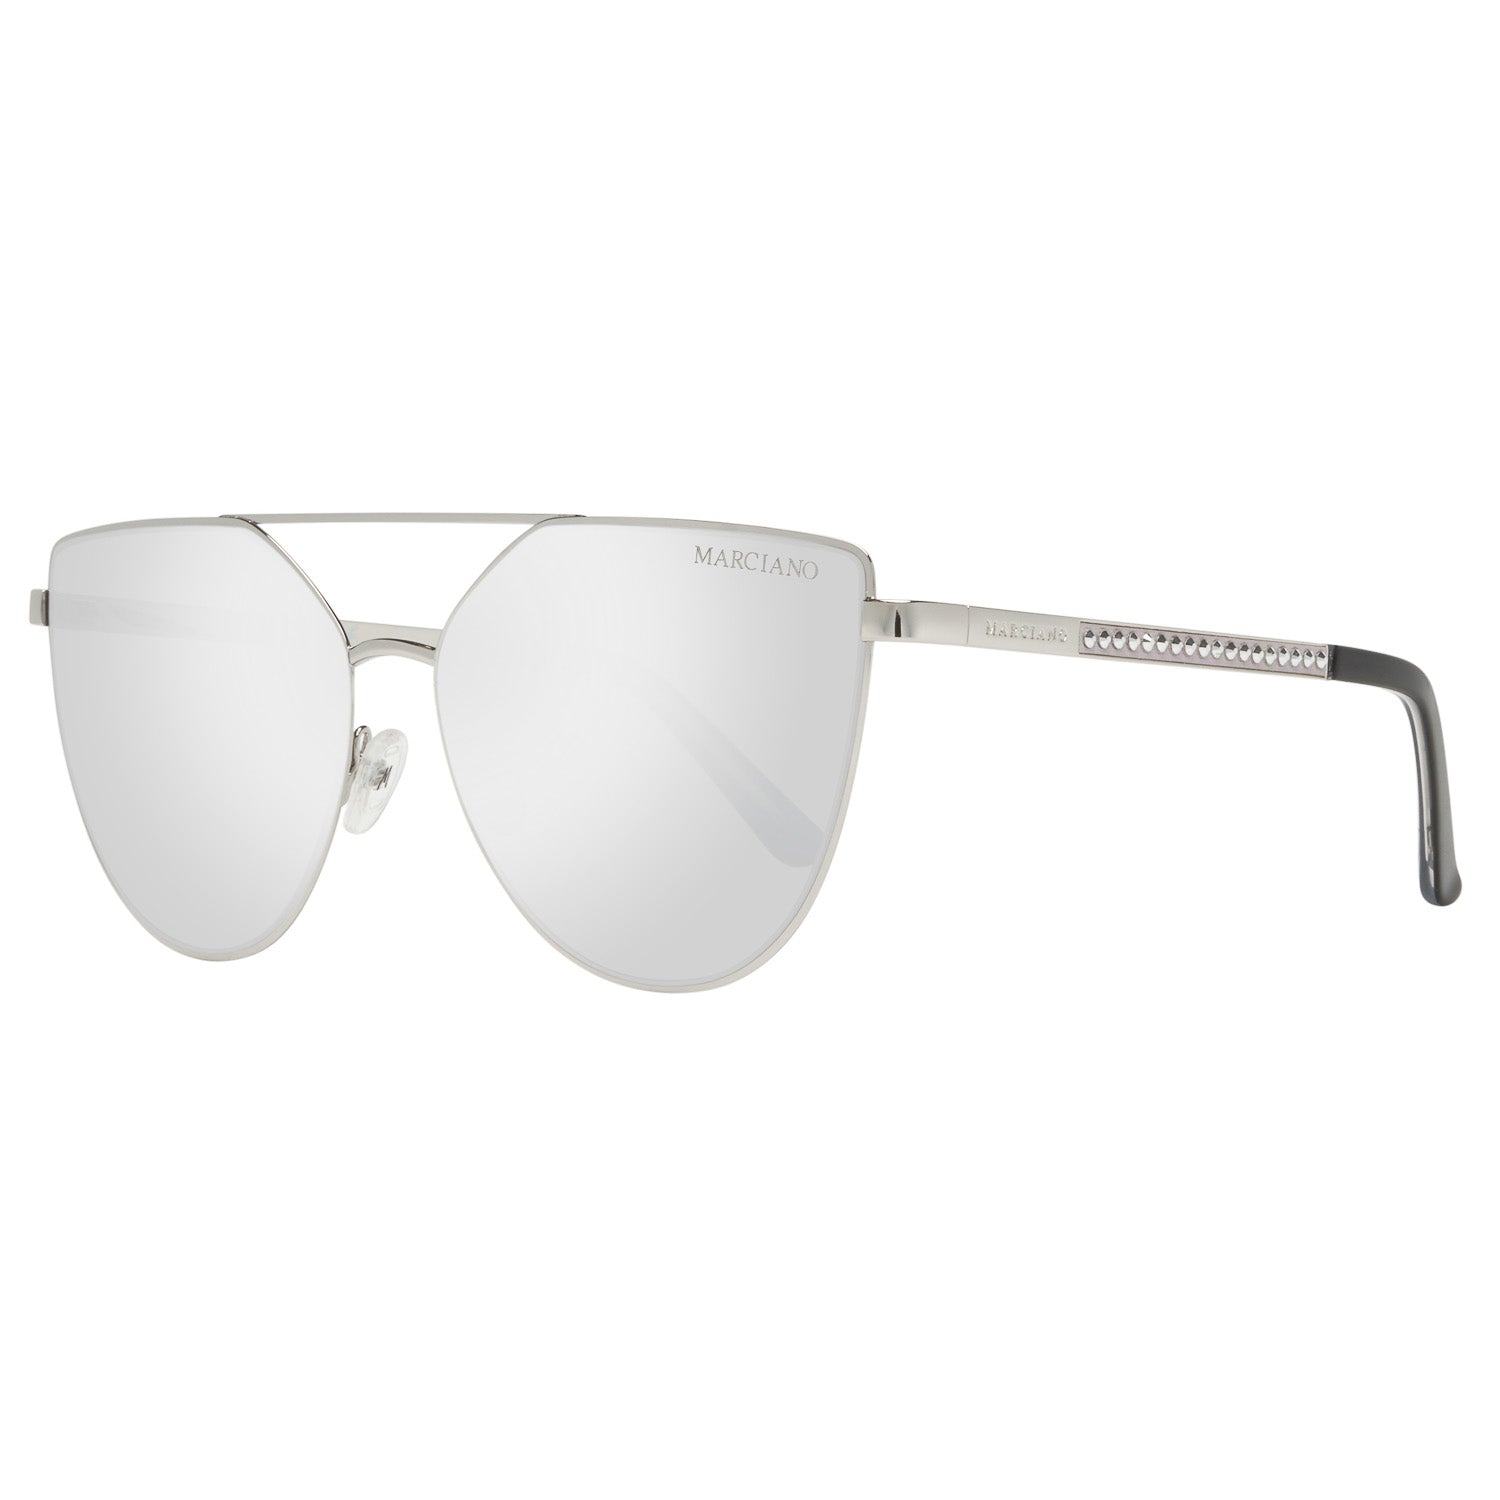 Marciano by Guess Sunglasses Marciano by Guess Sunglasses GM0778 10C 59 Eyeglasses Eyewear UK USA Australia 